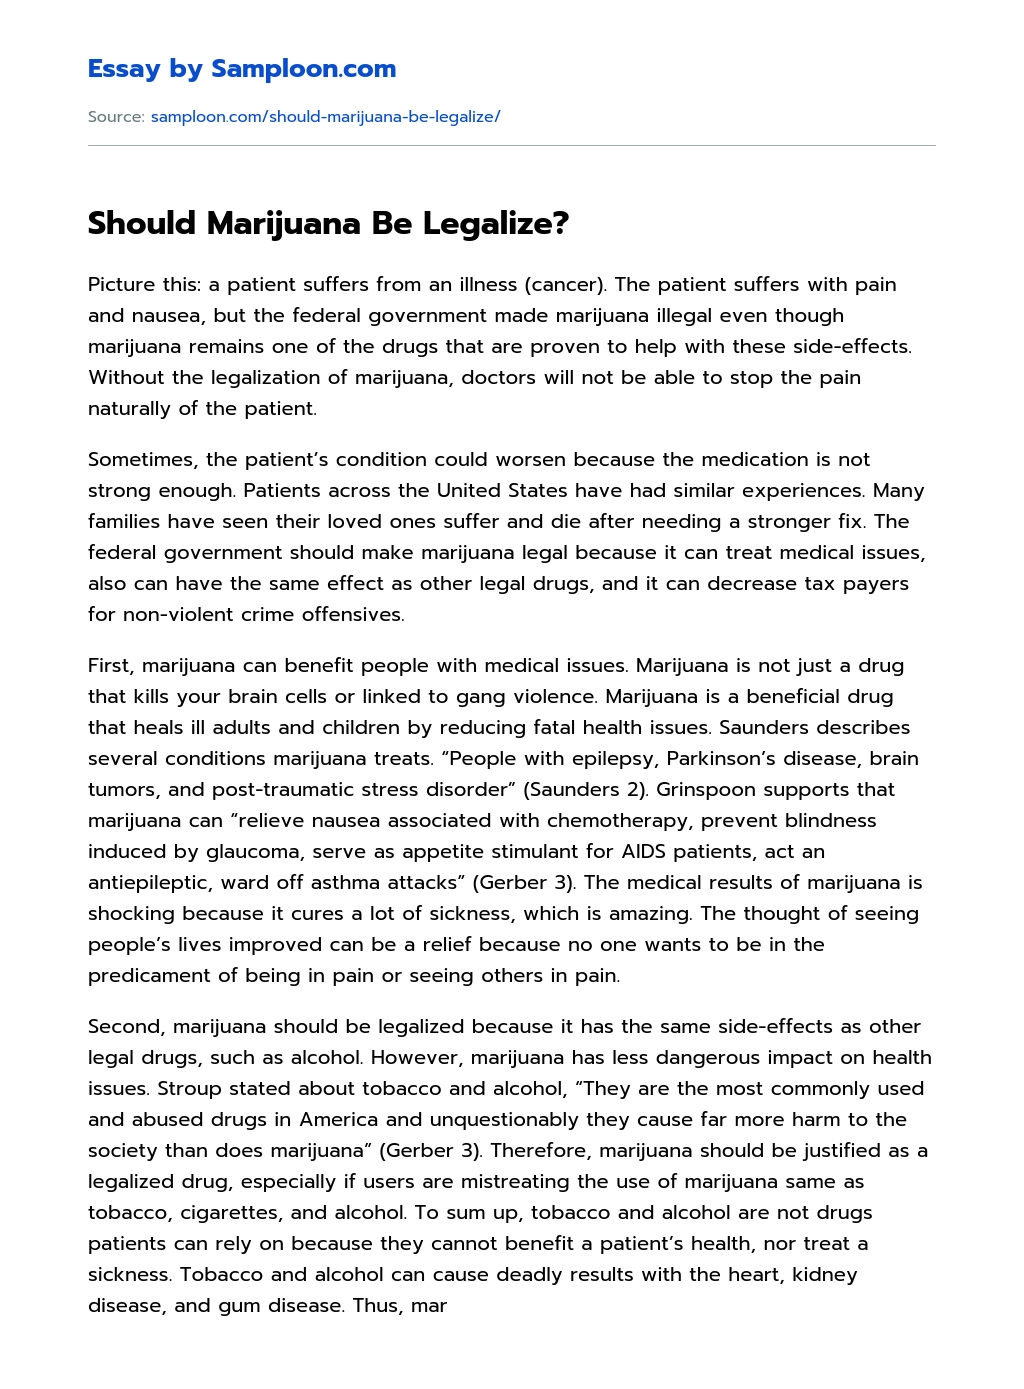 Should Marijuana Be Legalize? essay